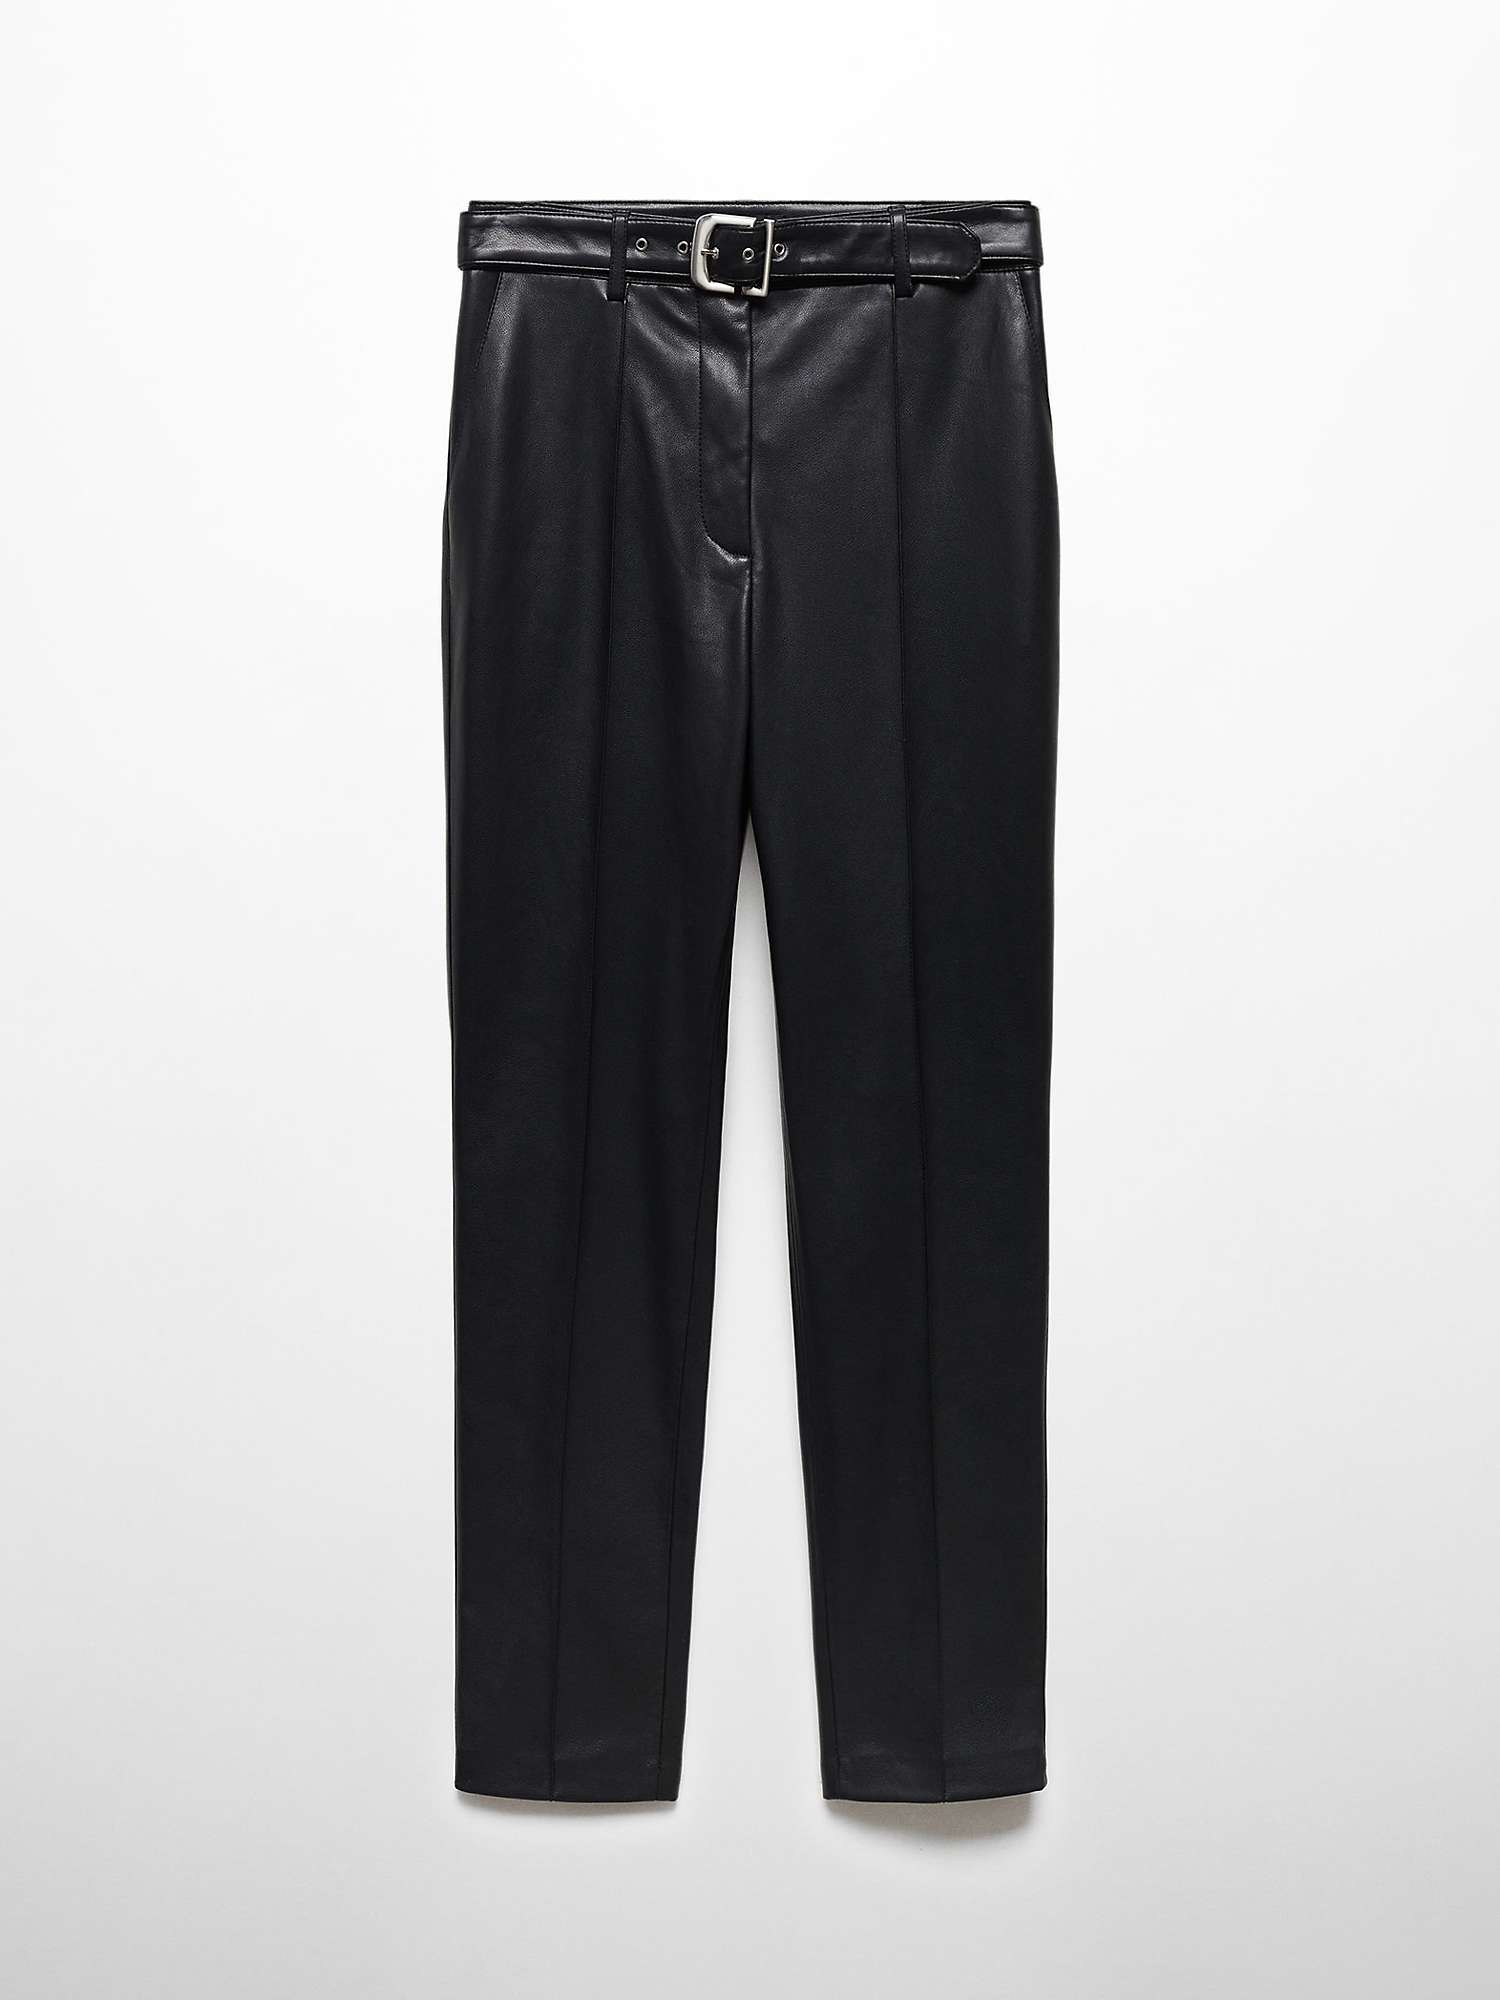 Buy Mango Anita Faux Leather Belt Trousers Online at johnlewis.com